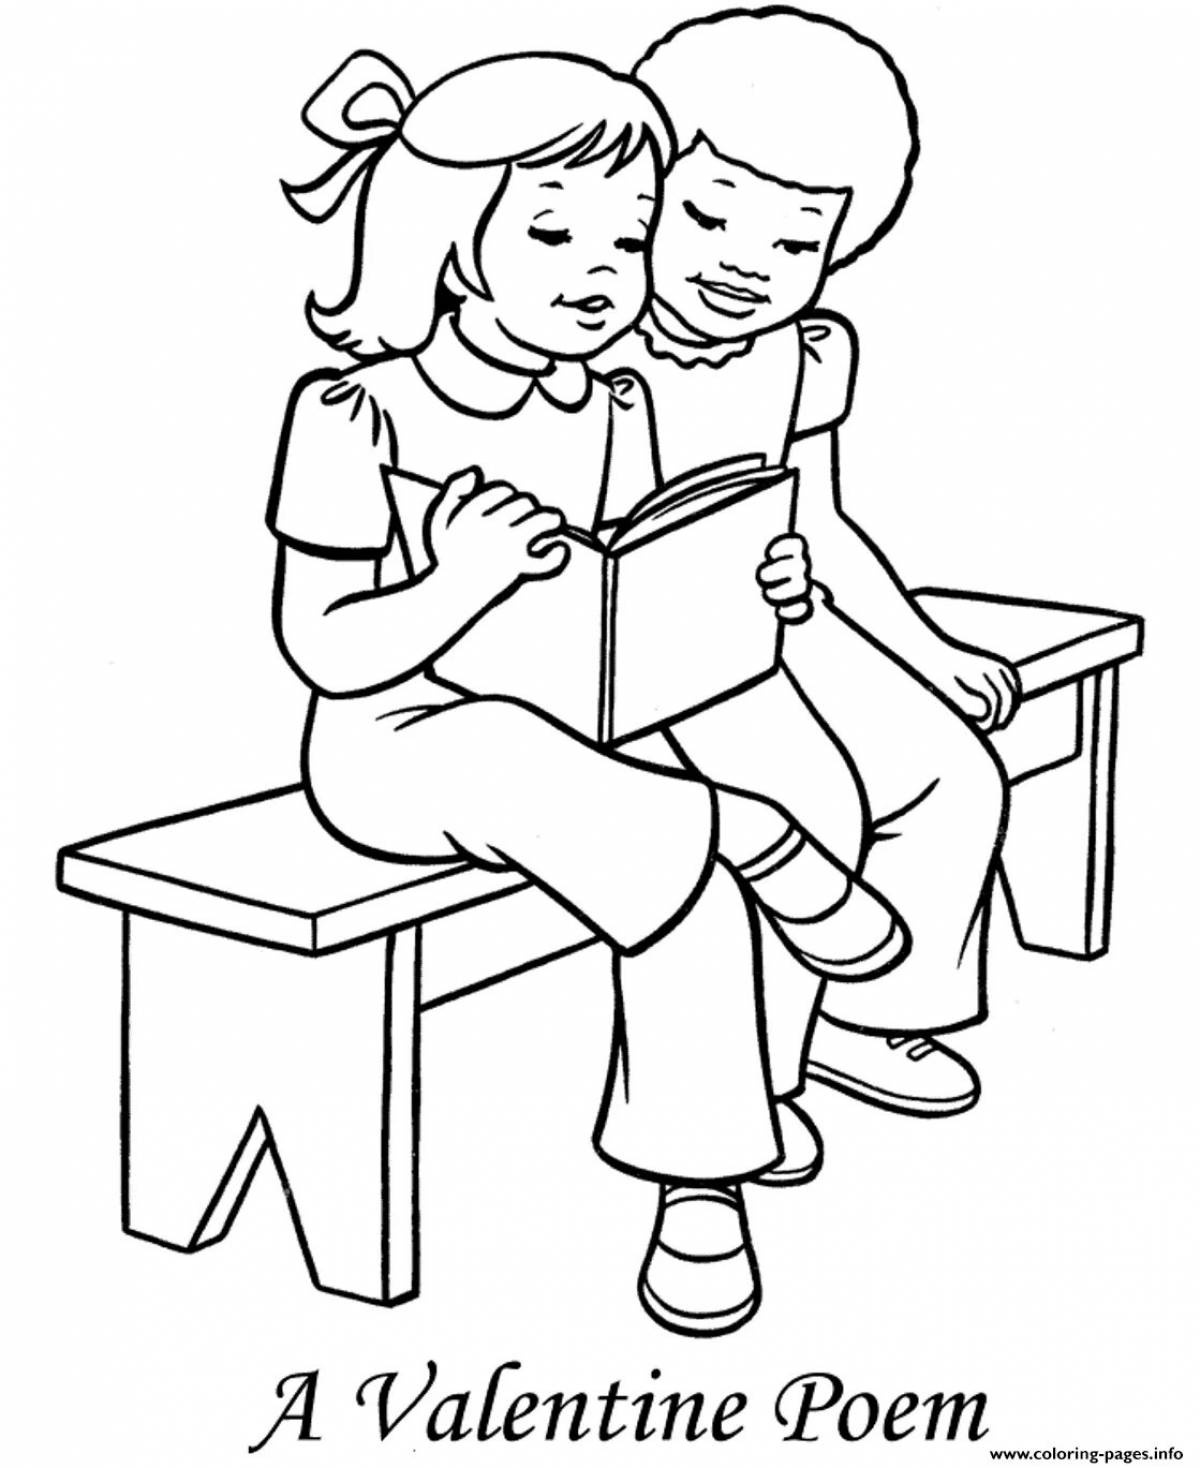 Children reading #13